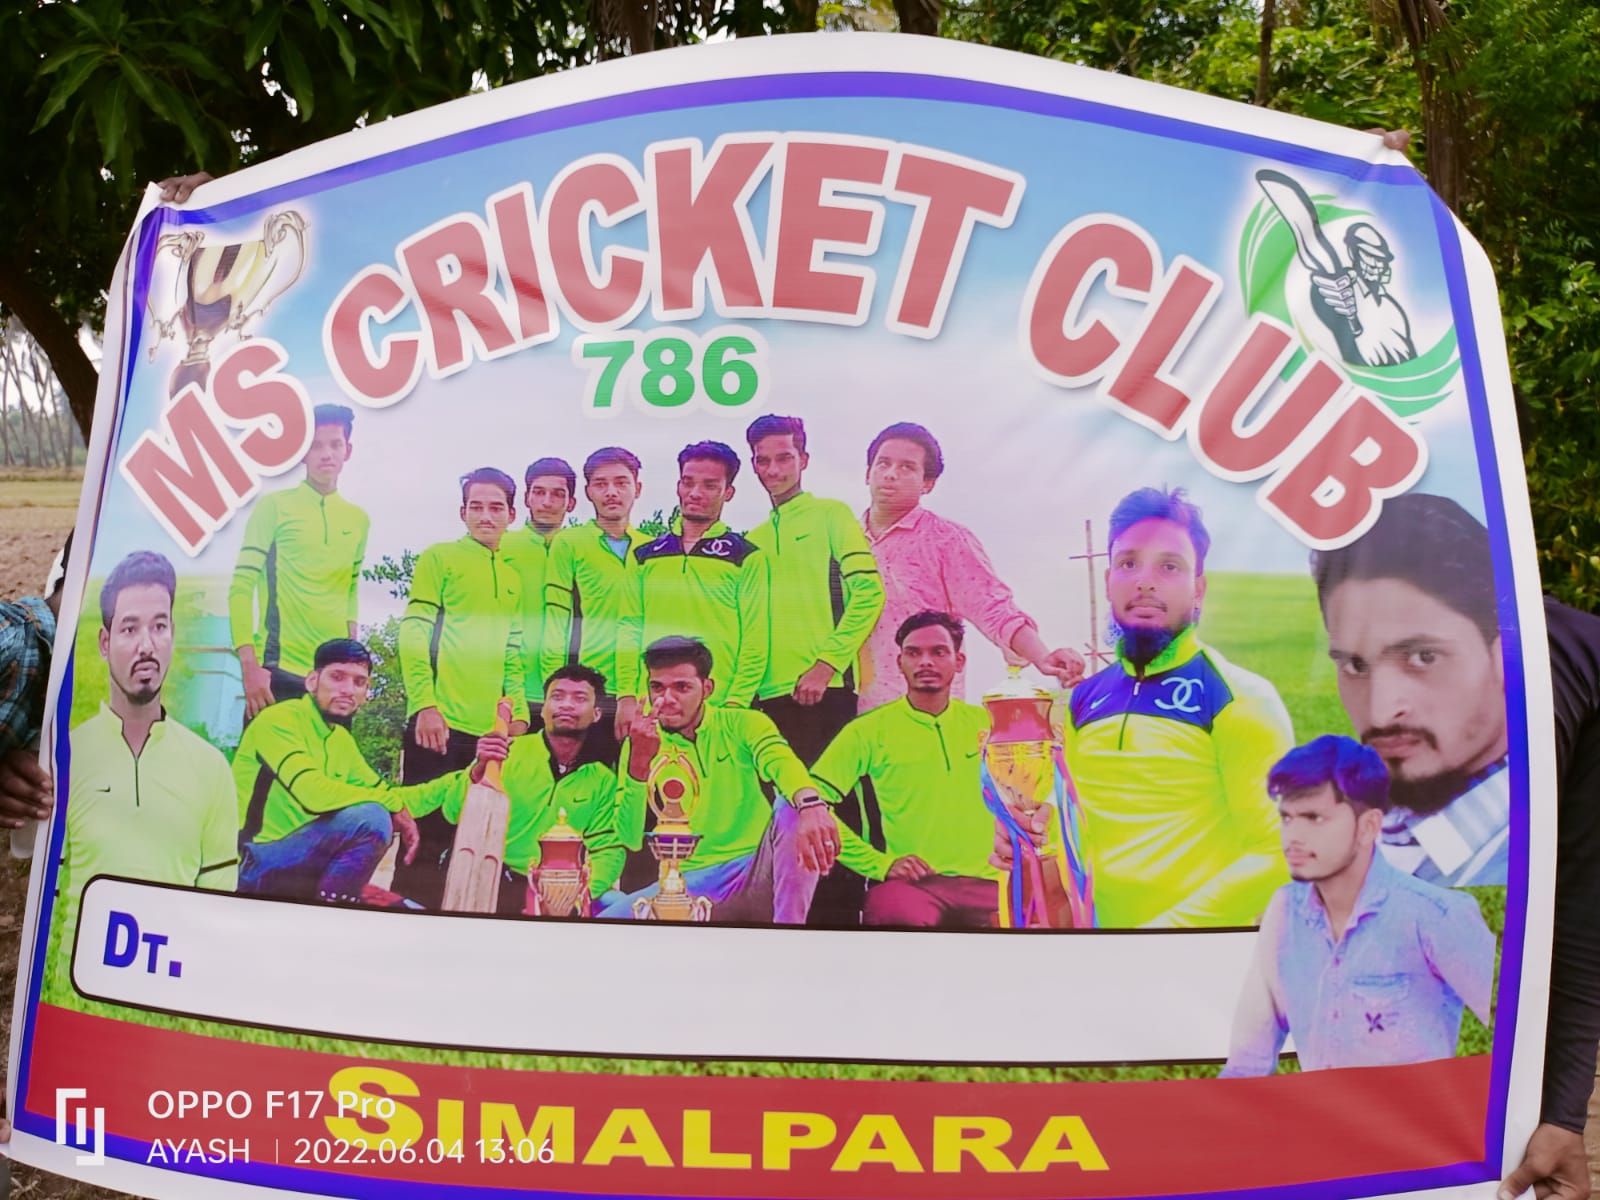 MS CRICKET CLUB, SIMALPARA (NIGHT MATCH-2023)